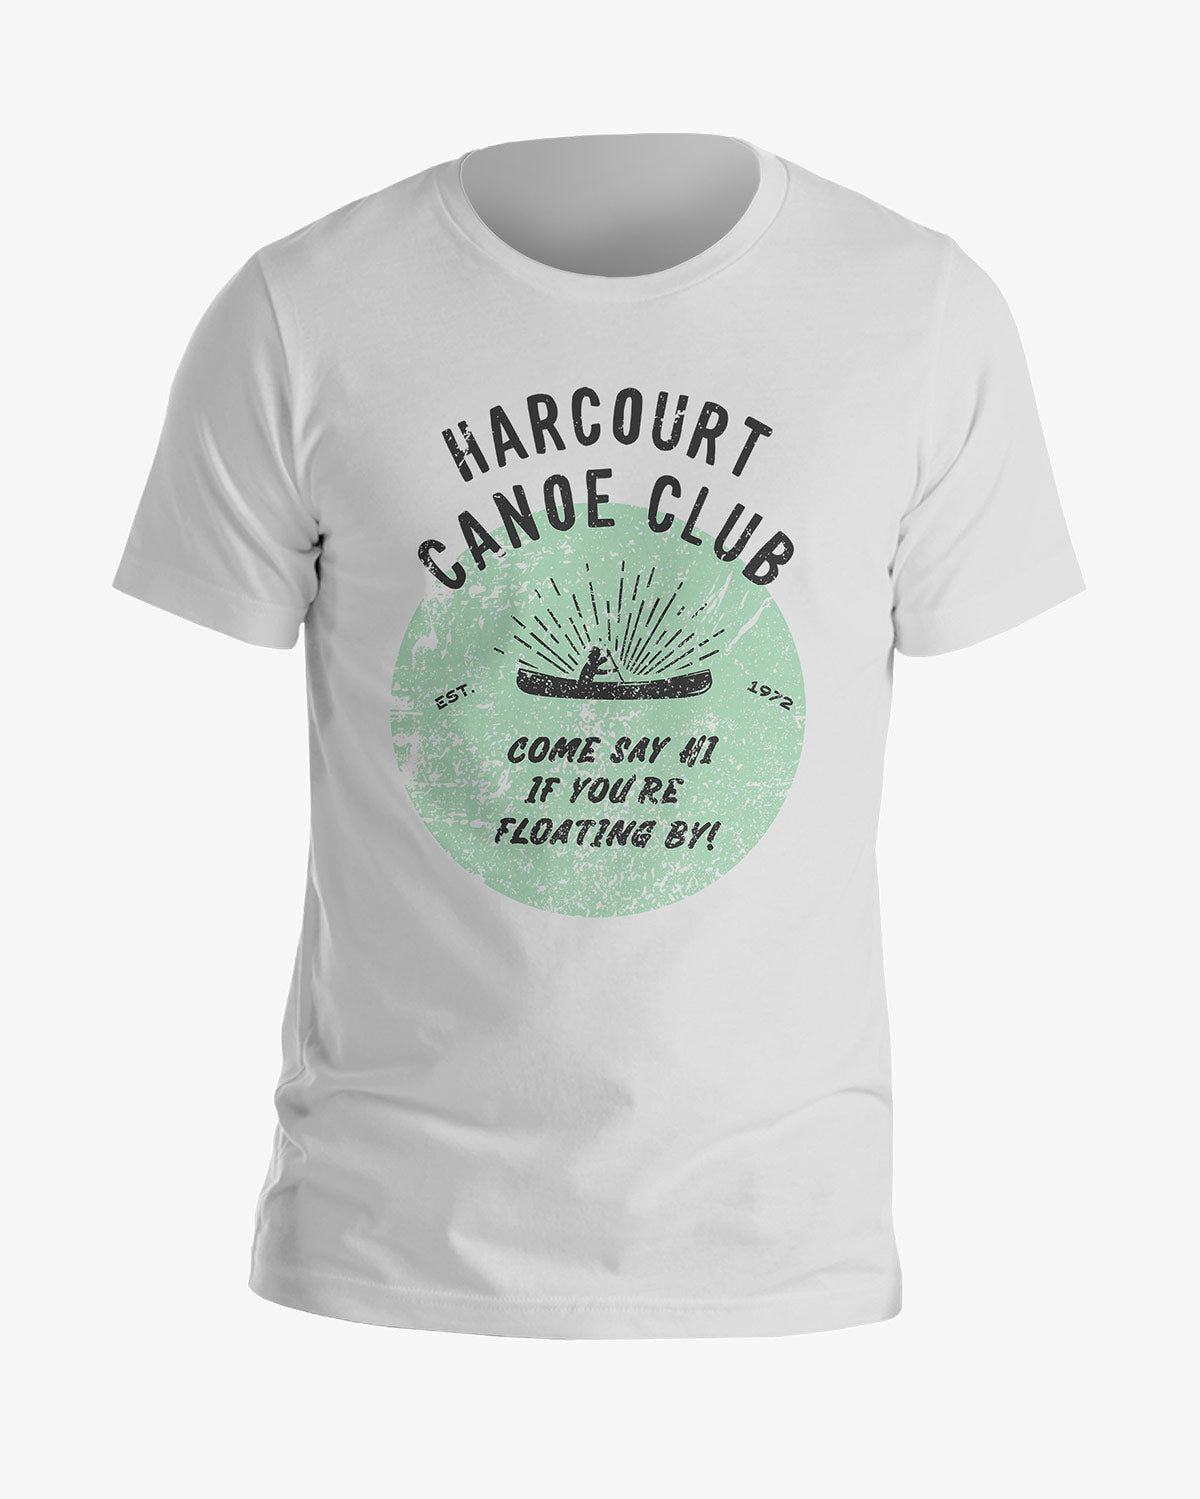 Canoe Club - Harcourt - Tee